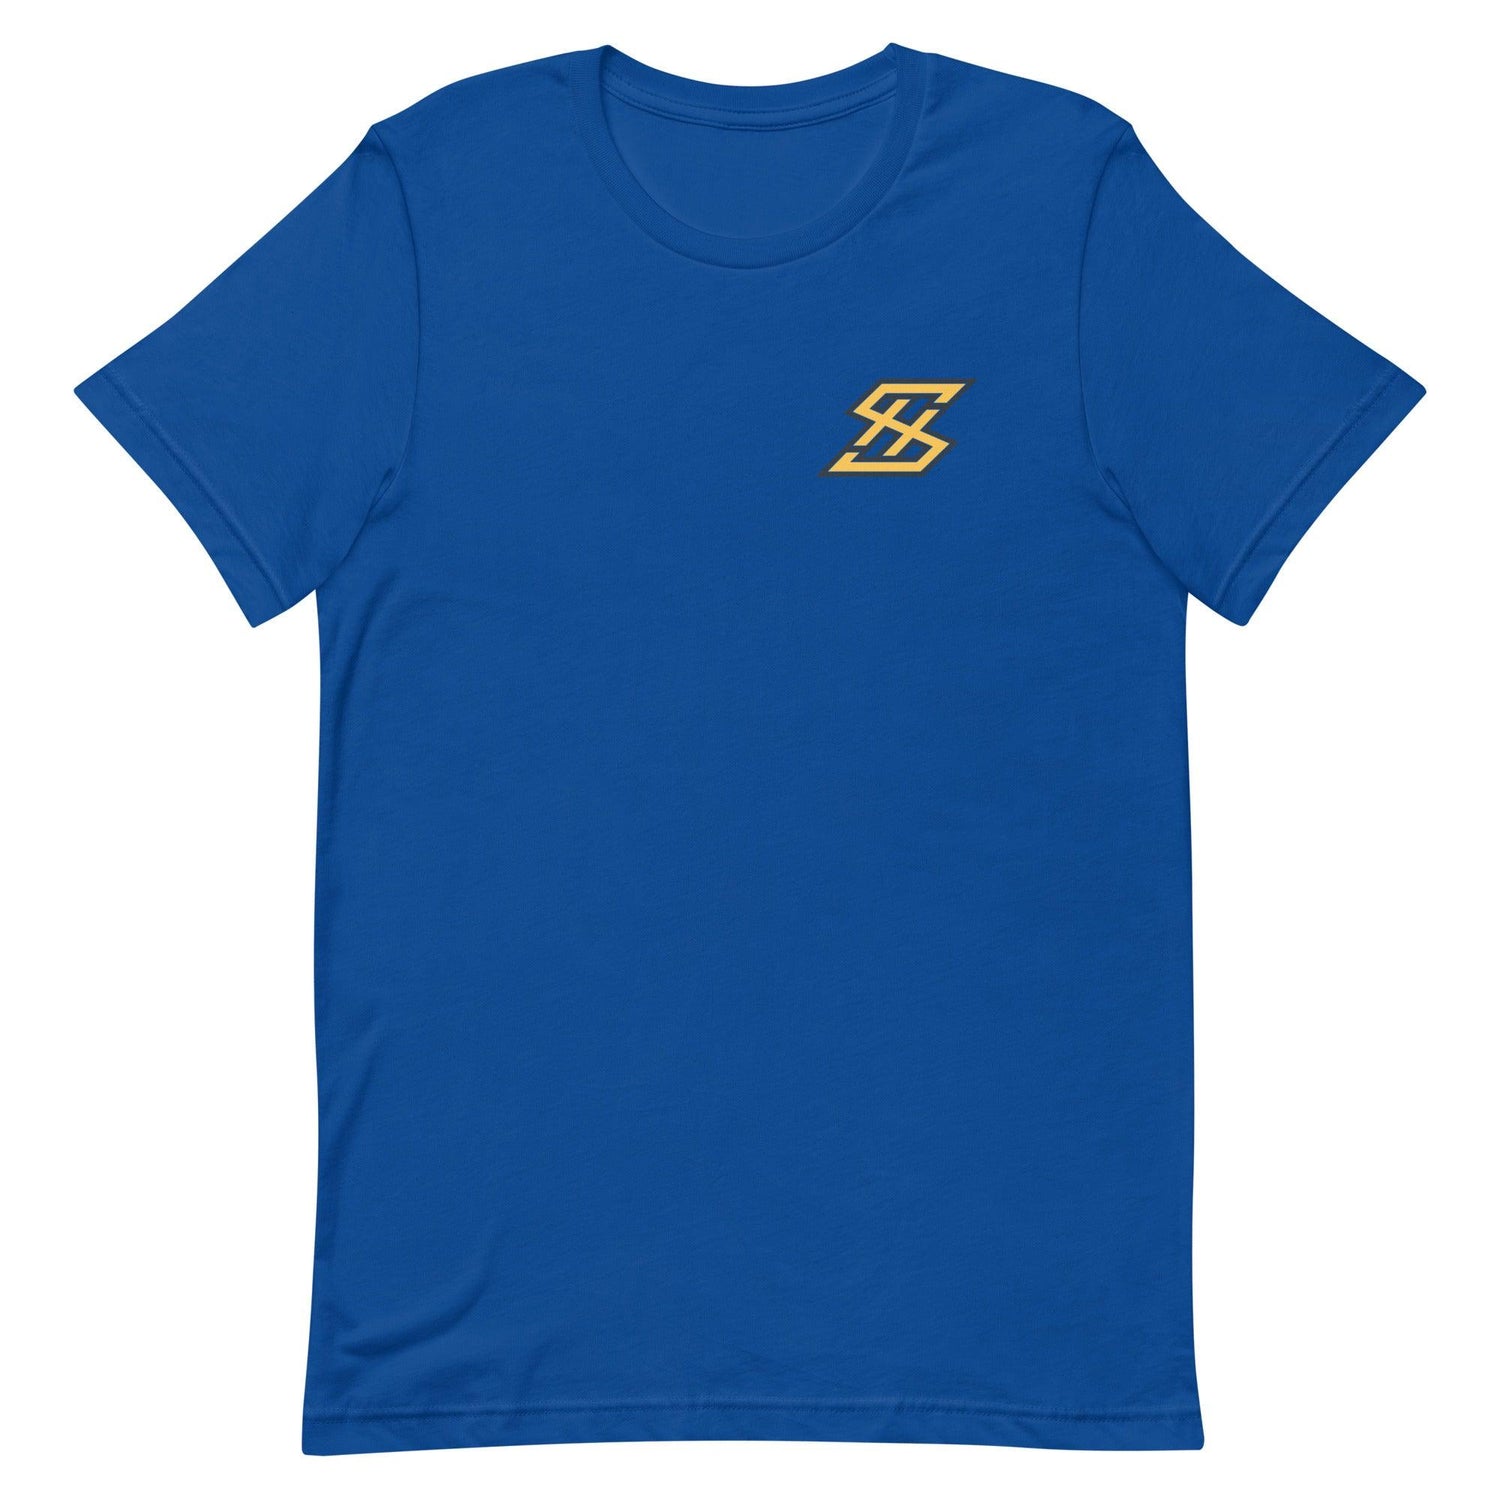 Sam Howard "Elite" t-shirt - Fan Arch